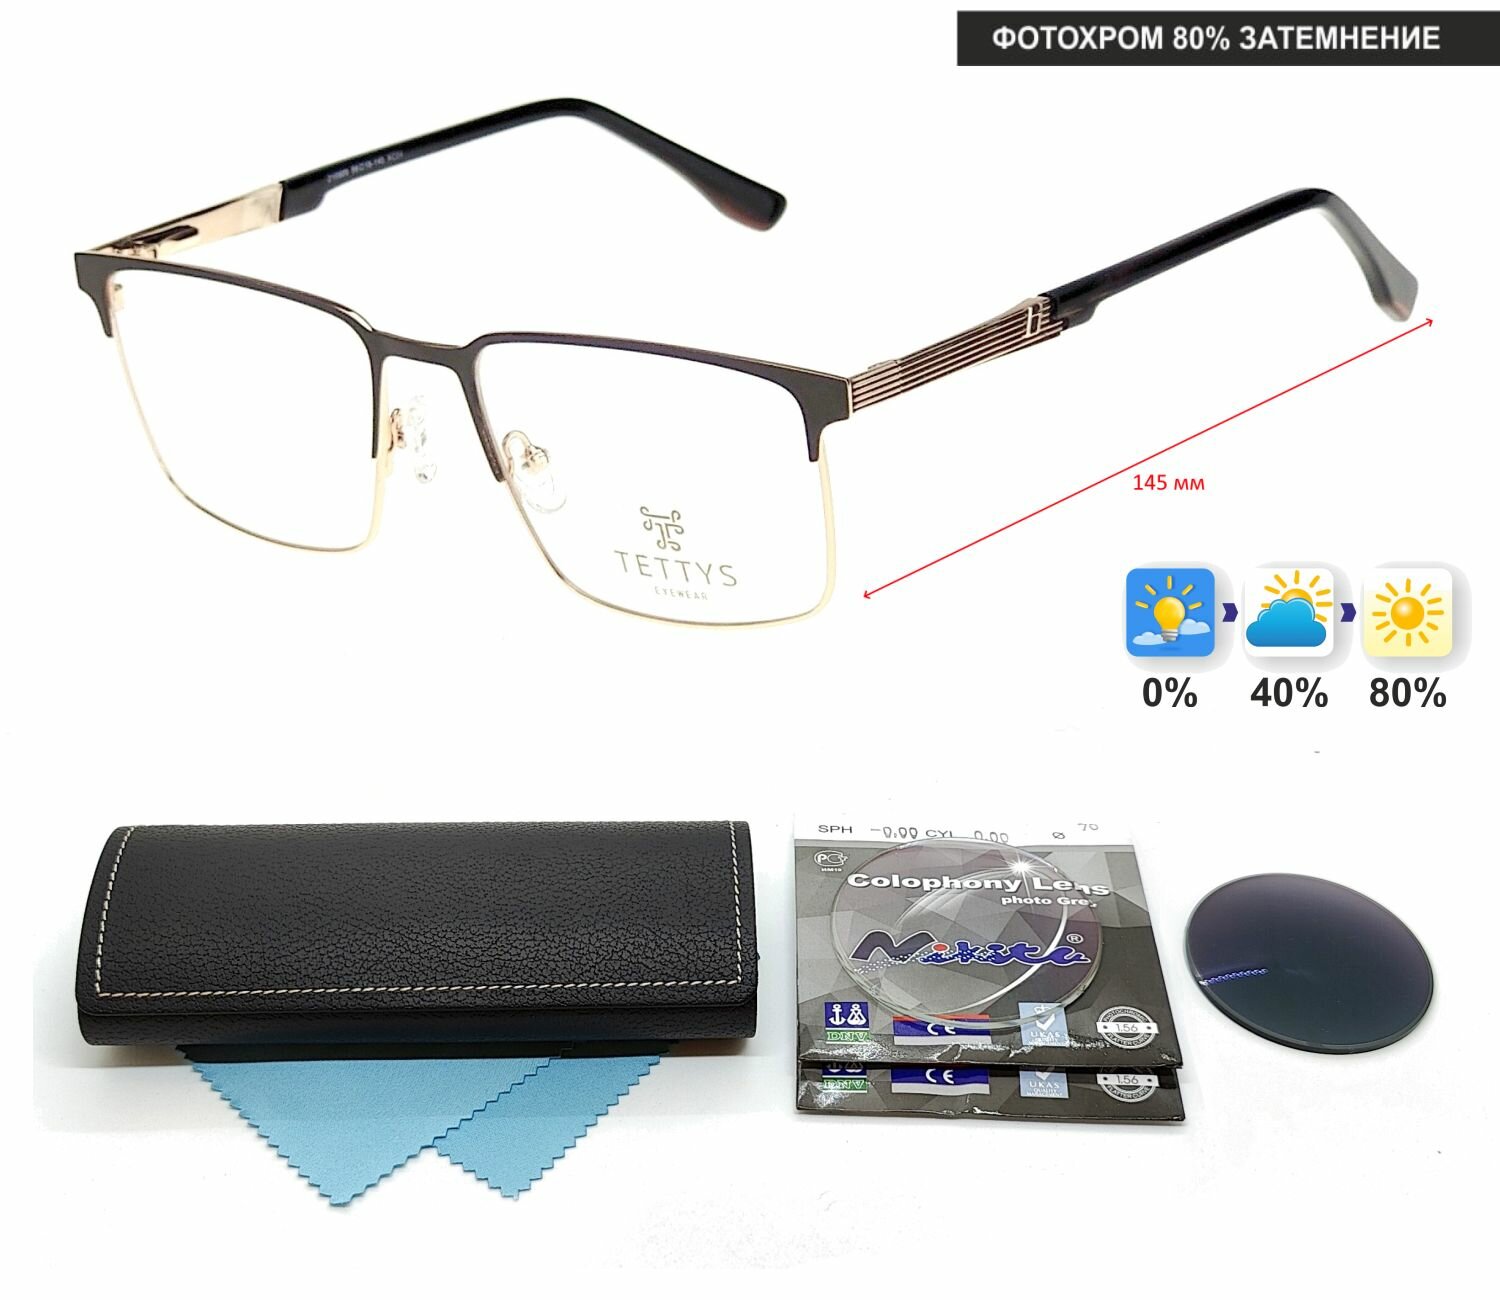 Фотохромные очки с футляром на магните TETTYS EYEWEAR мод. 210509 Цвет 4 с линзами NIKITA 1.56 Colophony GRAY, HMC+ -2.00 РЦ 68-70